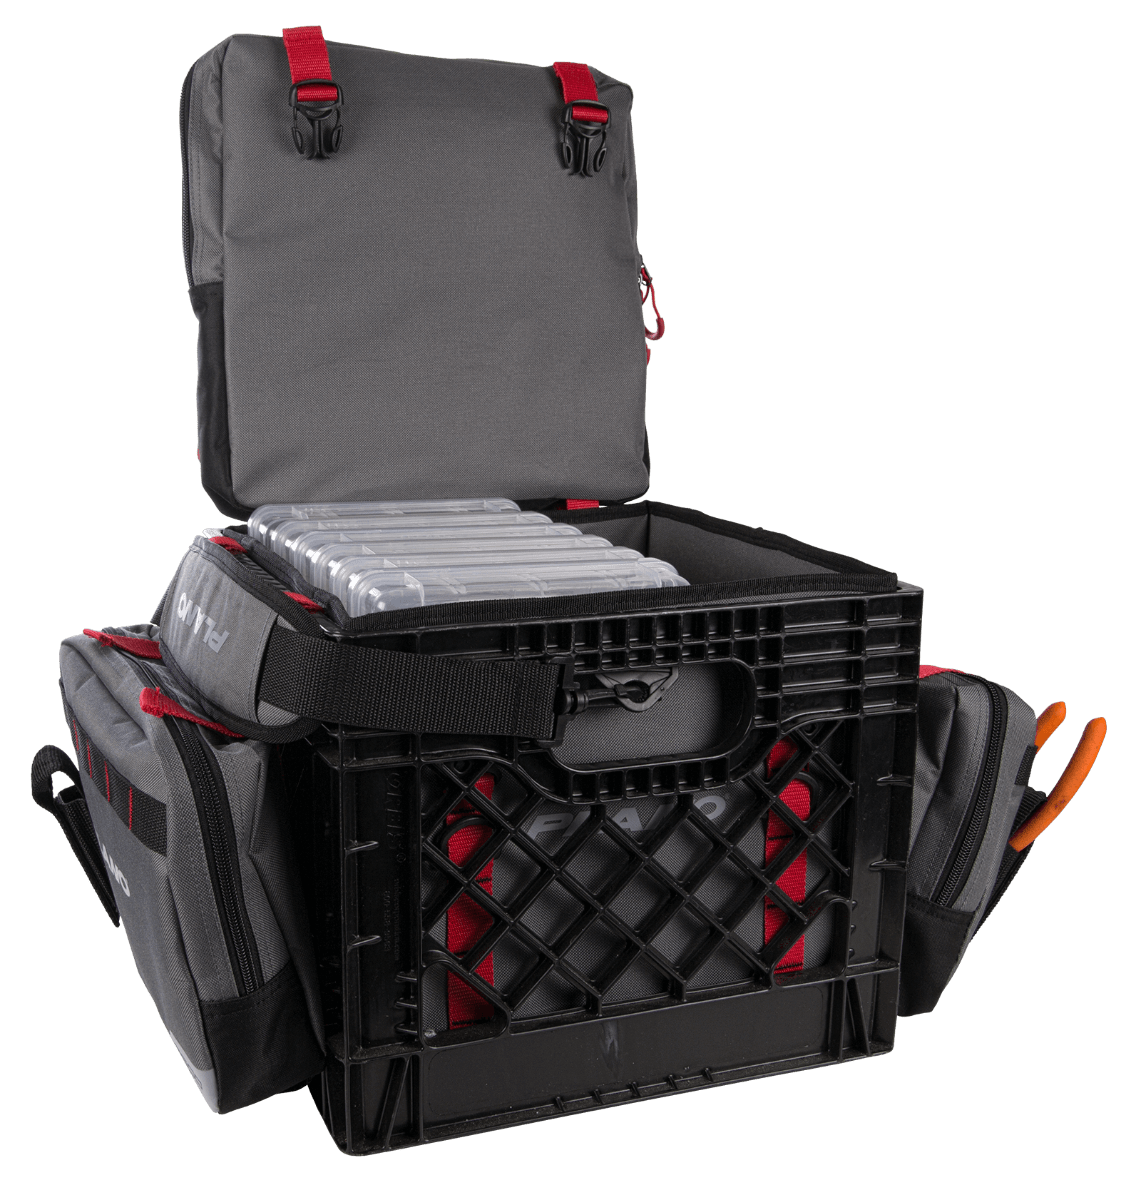 Plano - Kayak Soft Crate